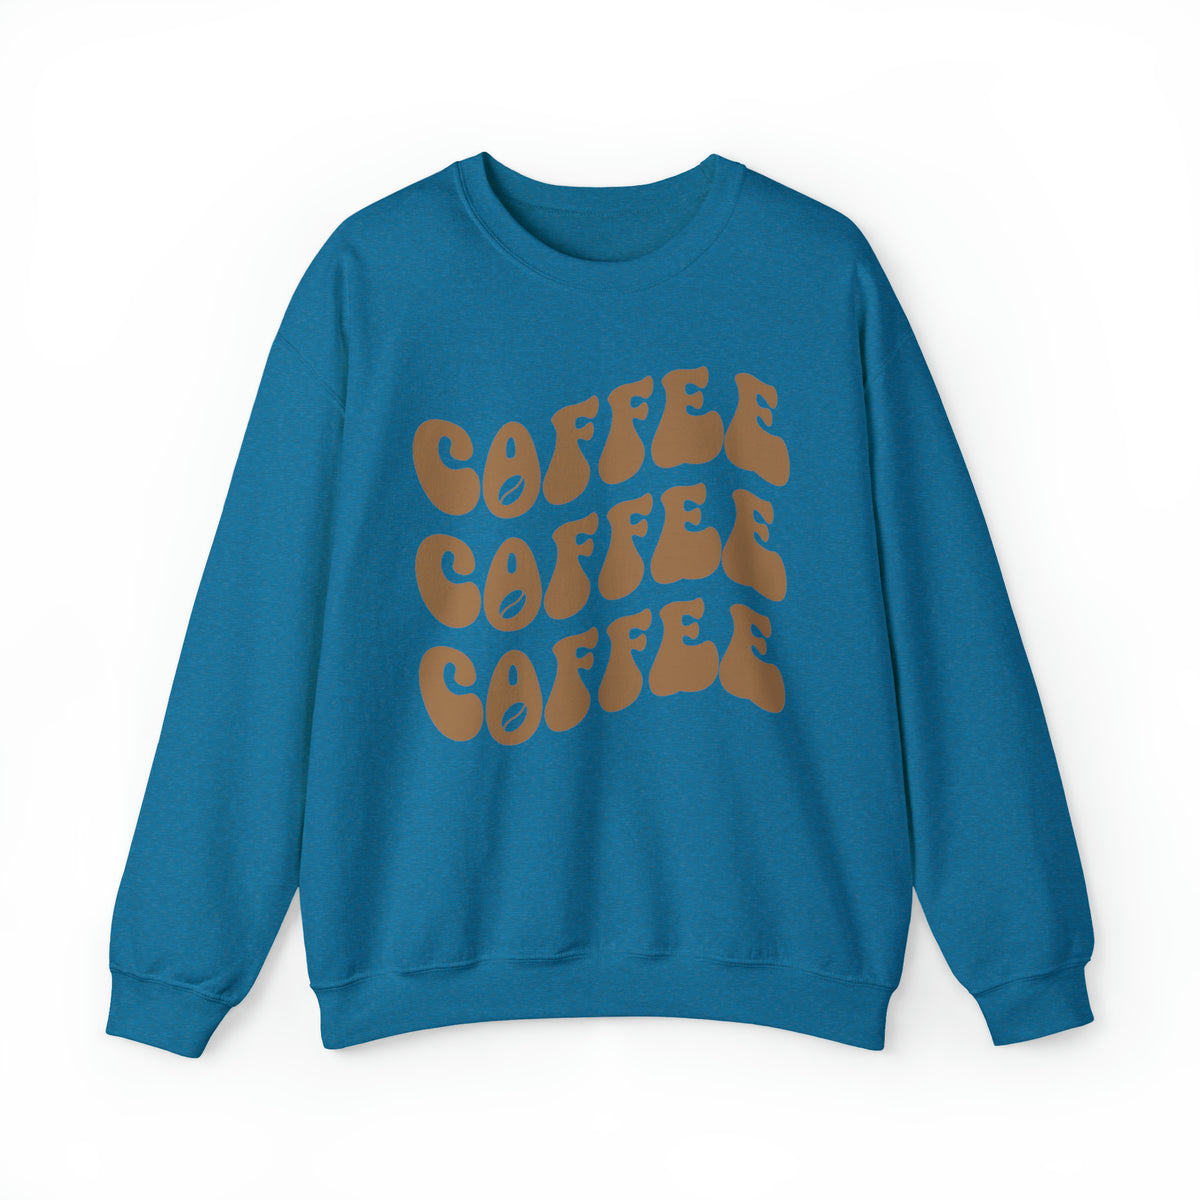 Coffee Sweatshirt, Coffee Lovers, Cute Coffee Sweatshirt, Trendy, Sweatshirts, Cute Sweatshirt, Oversized Fit